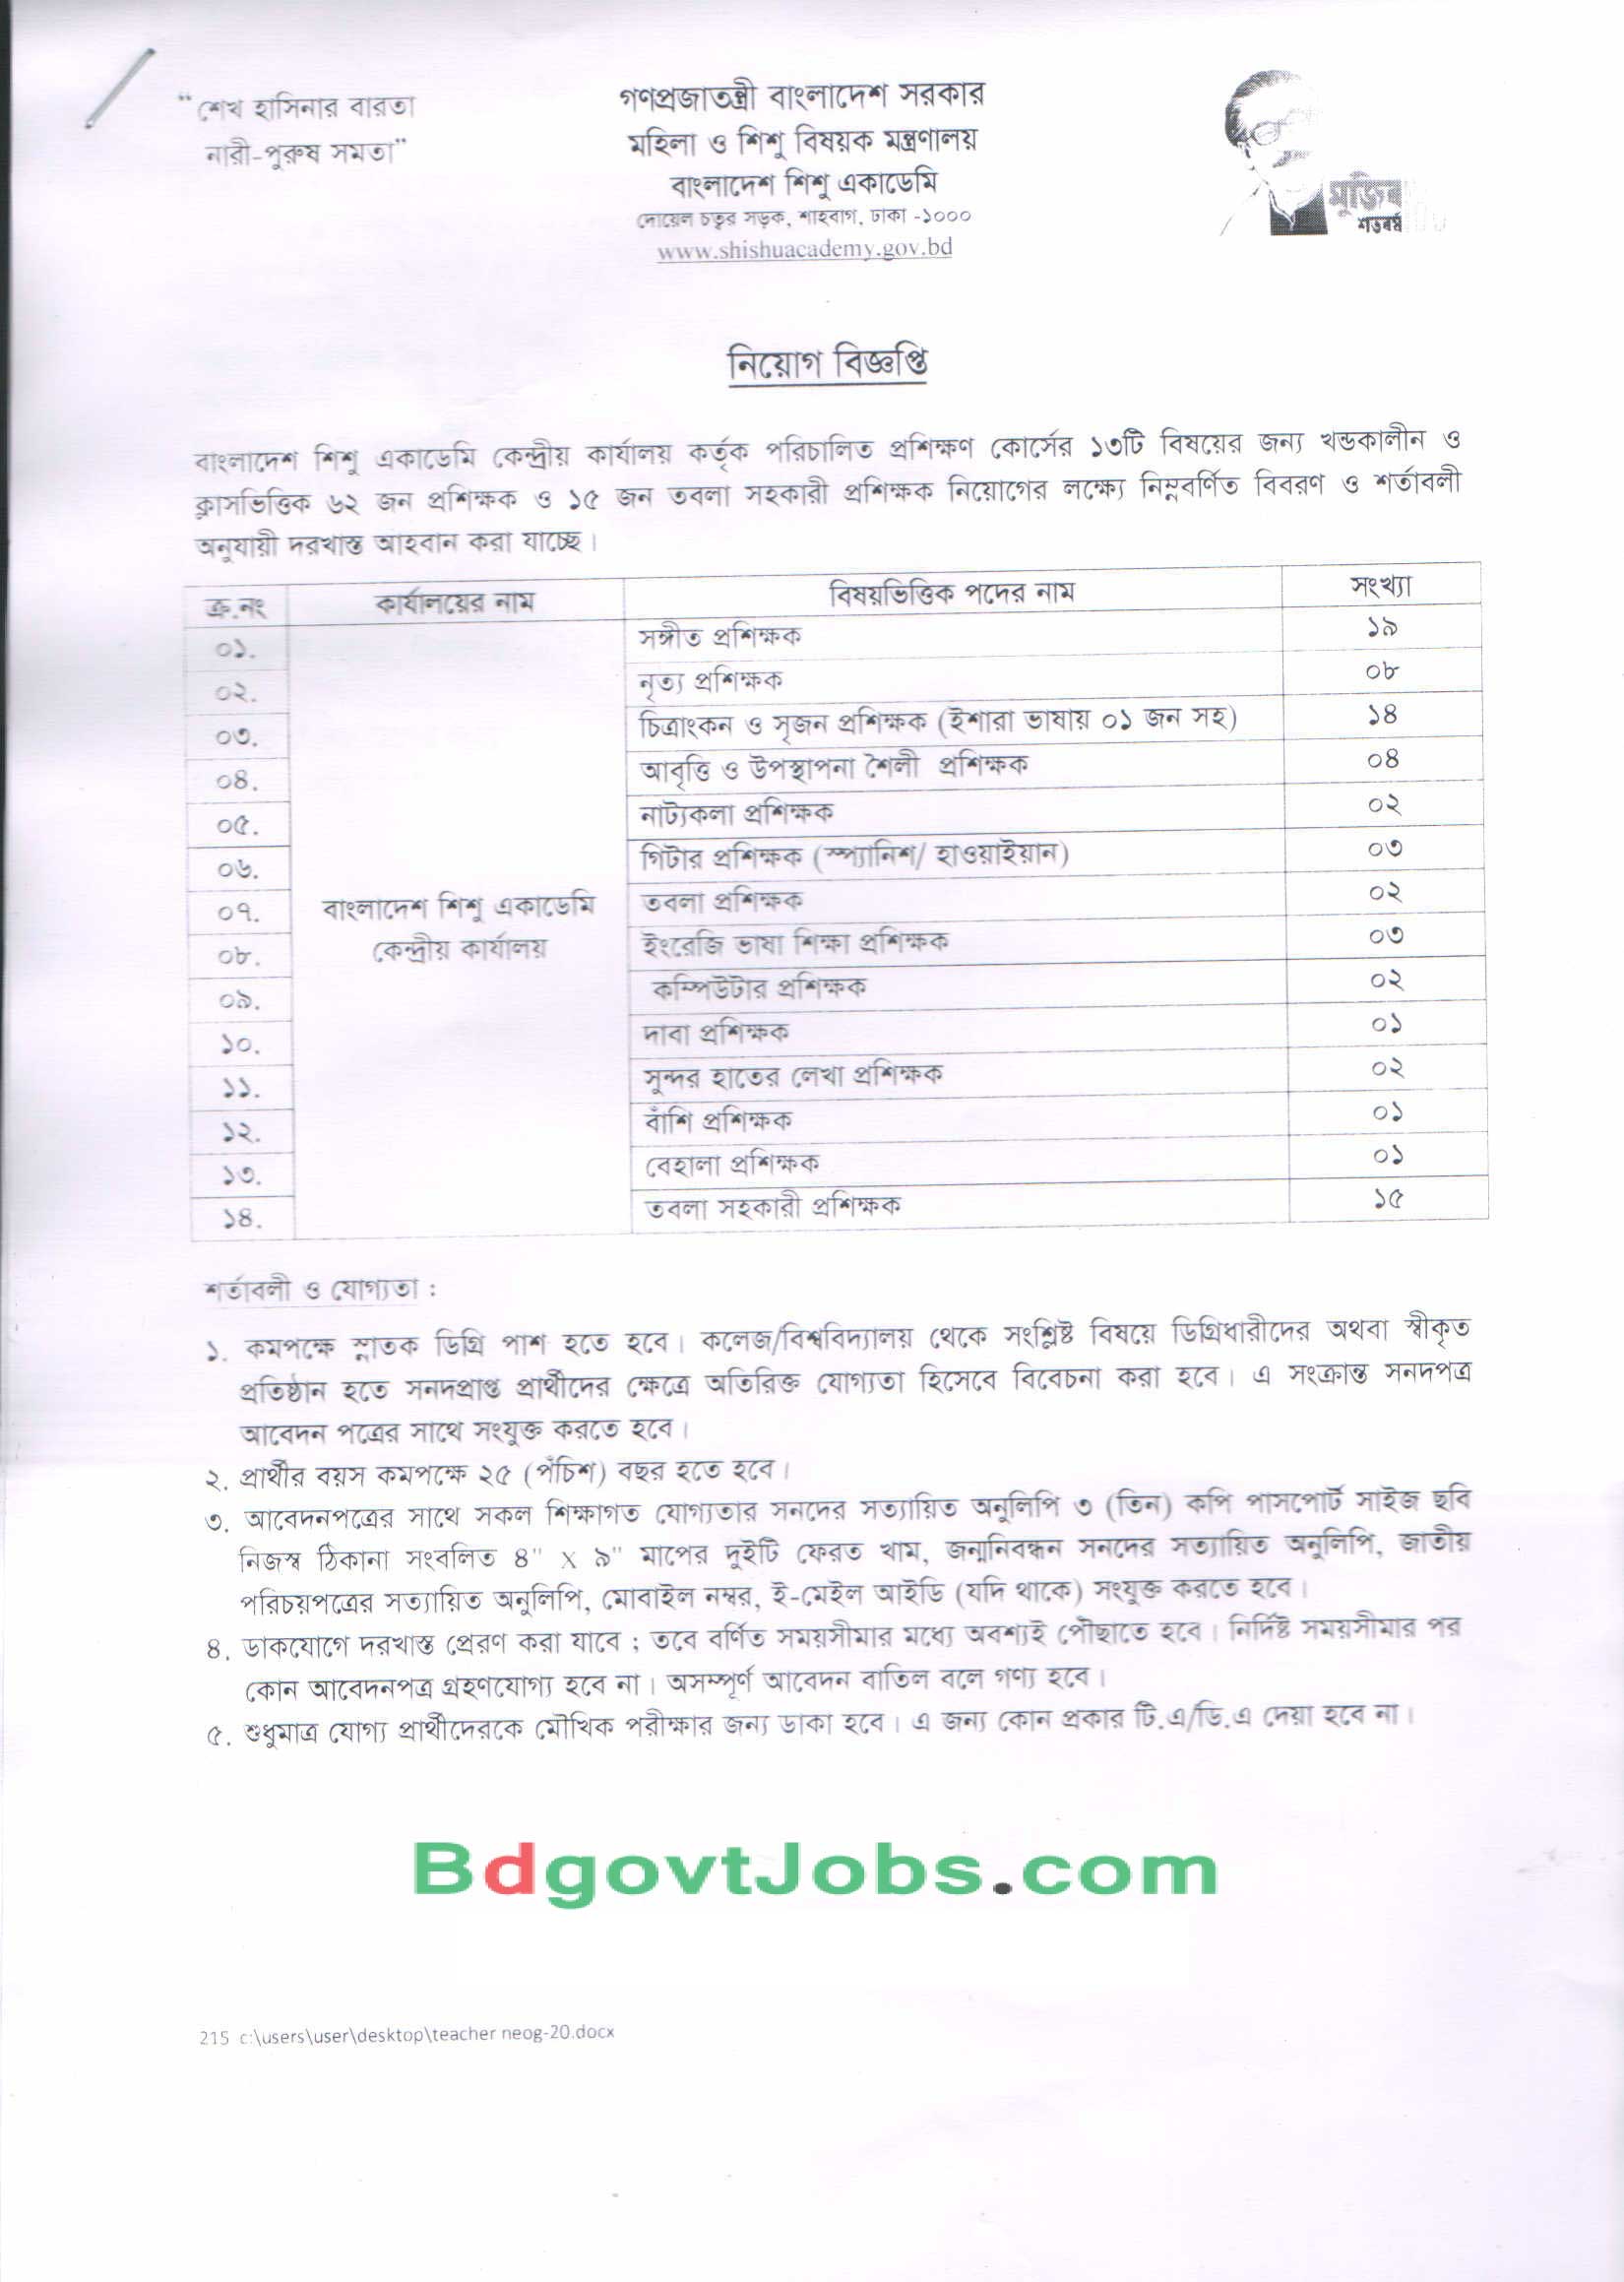 Bangladesh-Shishu-Academy-Job-Circular-2020